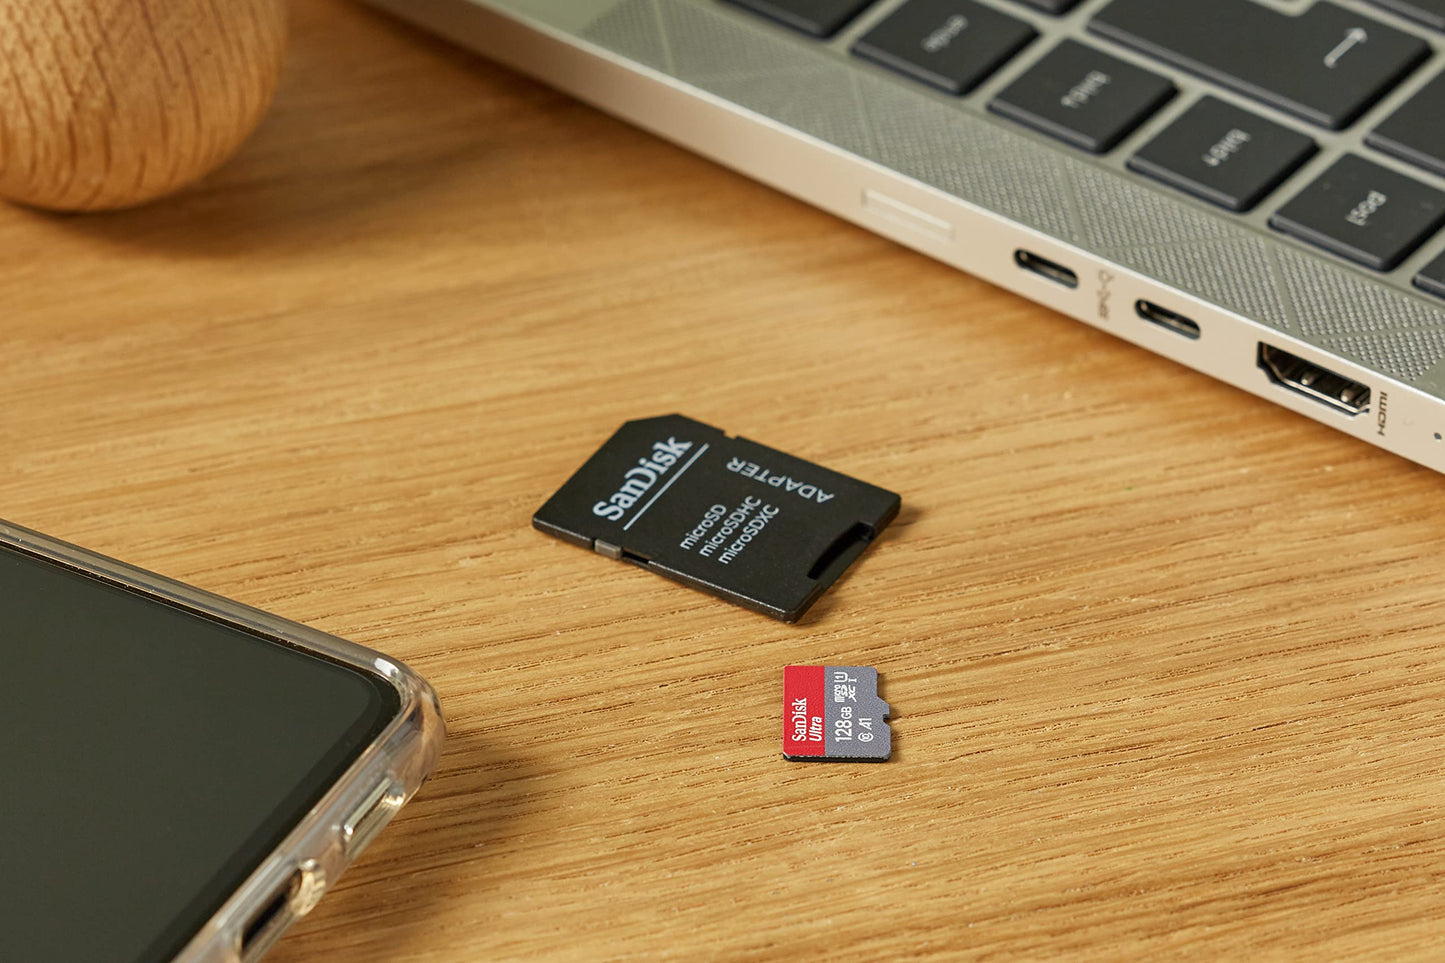 SanDisk 512GB Ultra microSDXC UHS-I Memory Card with Adapter - 120MB/s, C10, U1, Full HD, A1, Micro SD Card - SDSQUA4-512G-GN6MA